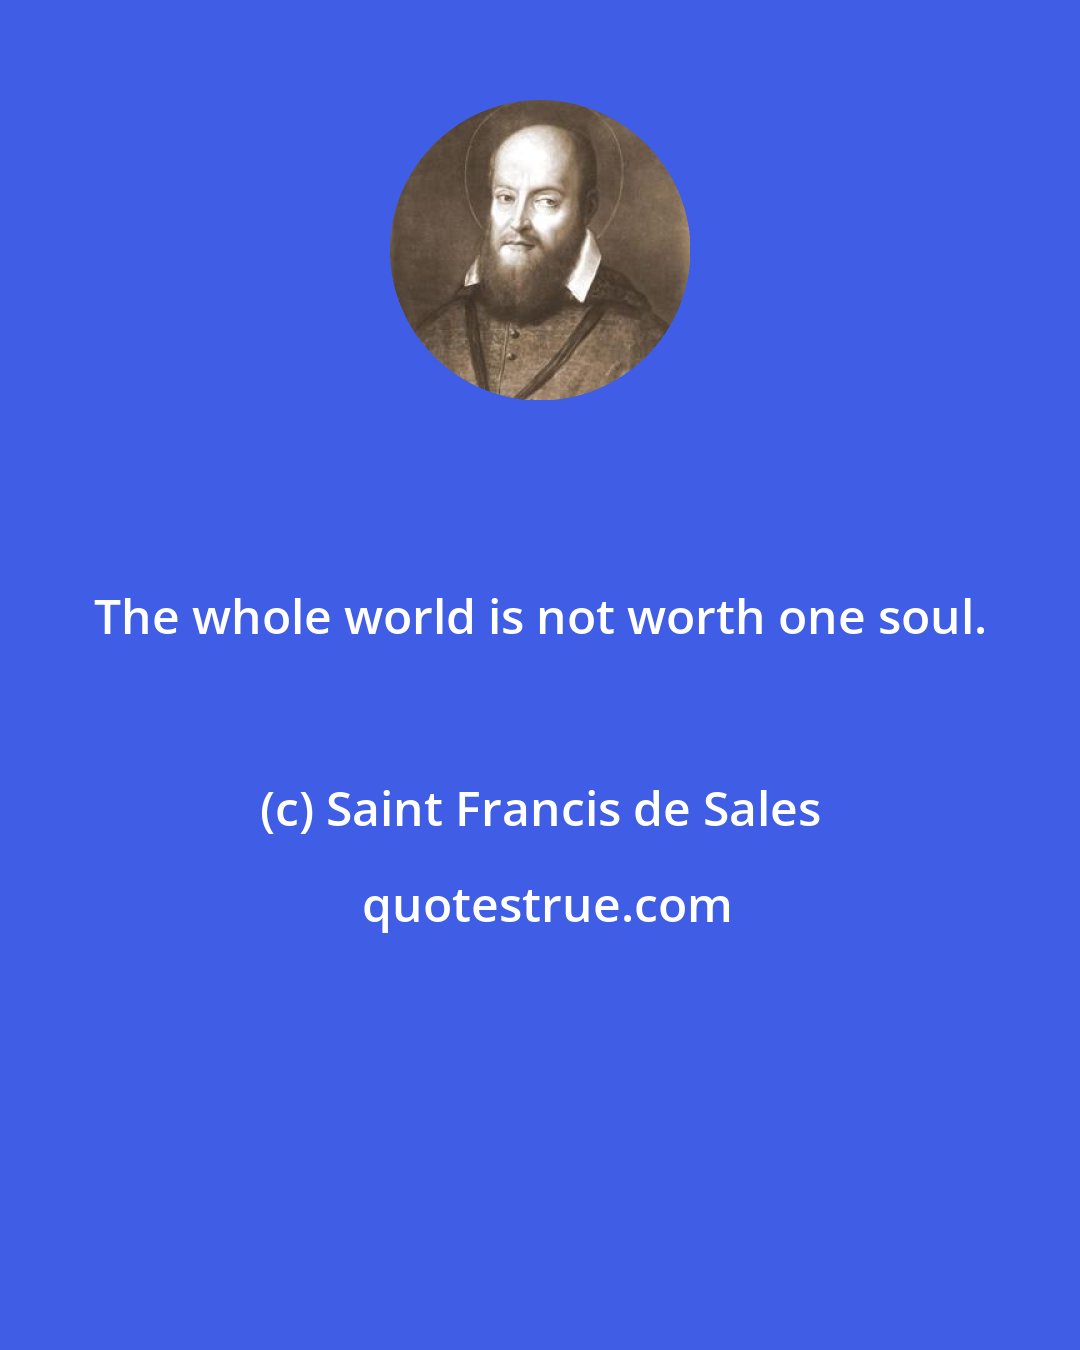 Saint Francis de Sales: The whole world is not worth one soul.